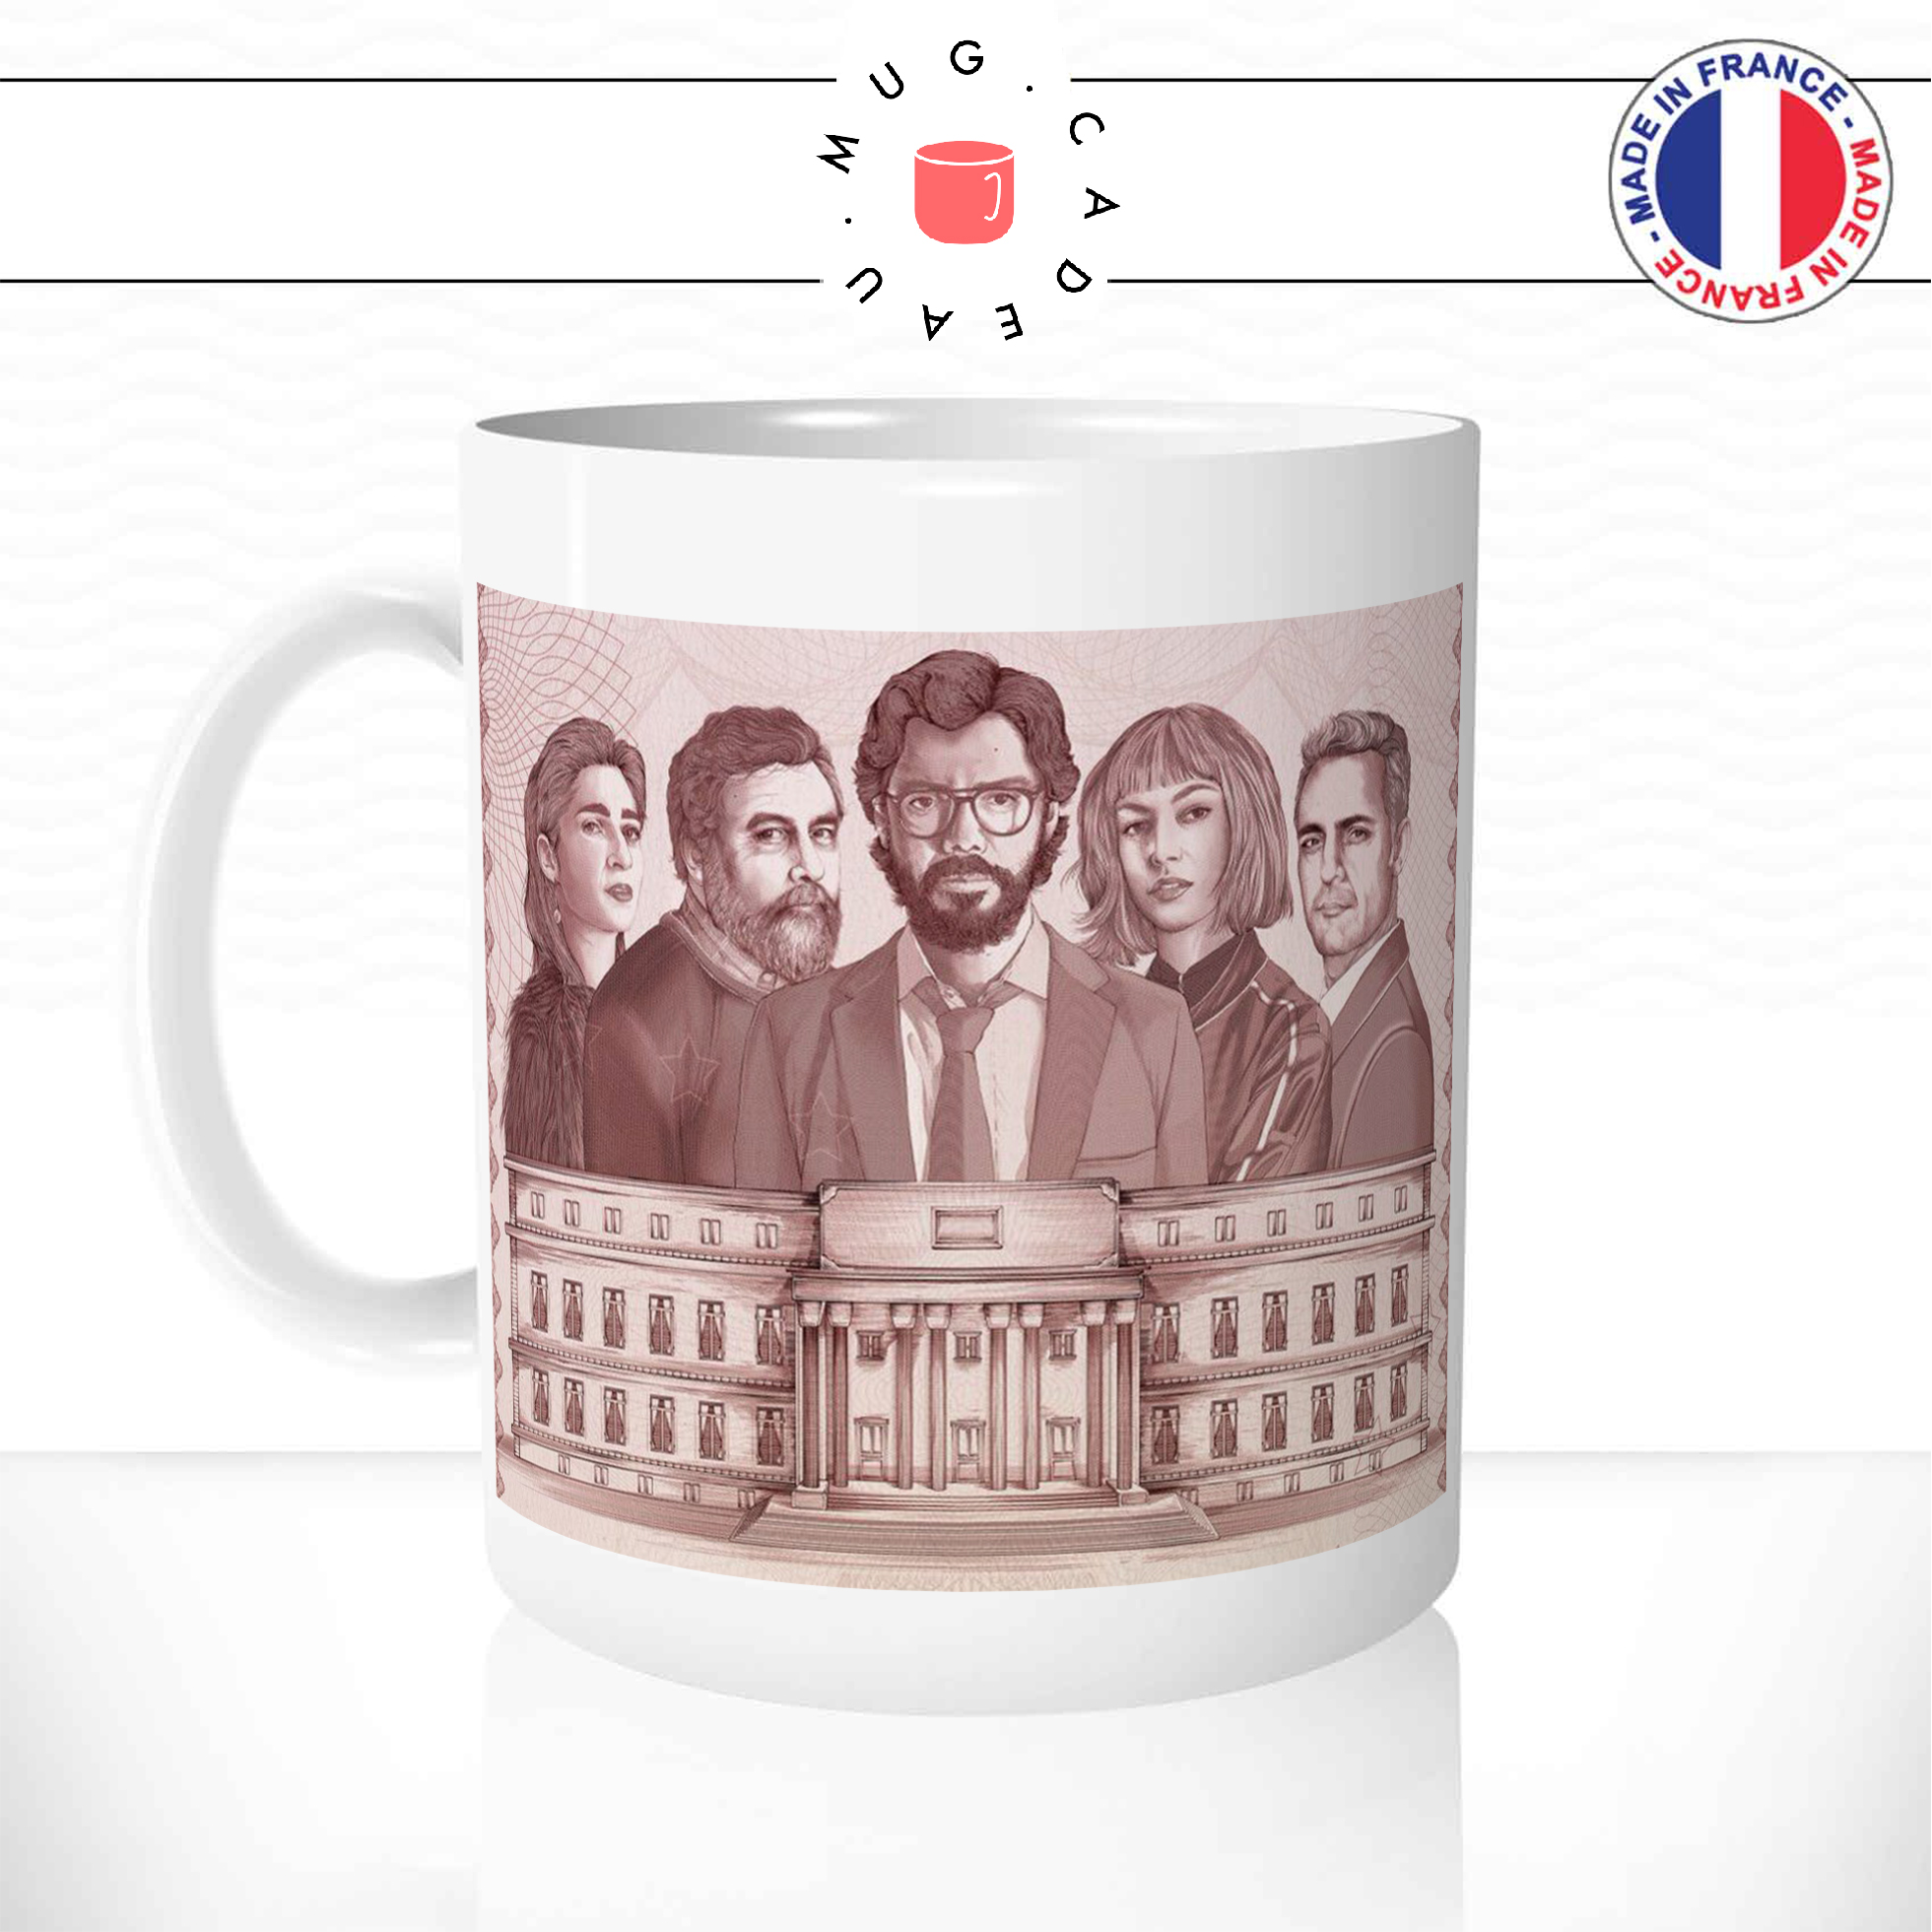 mug-tasse-ref2-money-heist-casa-del-papel-banque-affiche-personnages-rouges-cafe-the-mugs-tasses-personnalise-anse-gauche